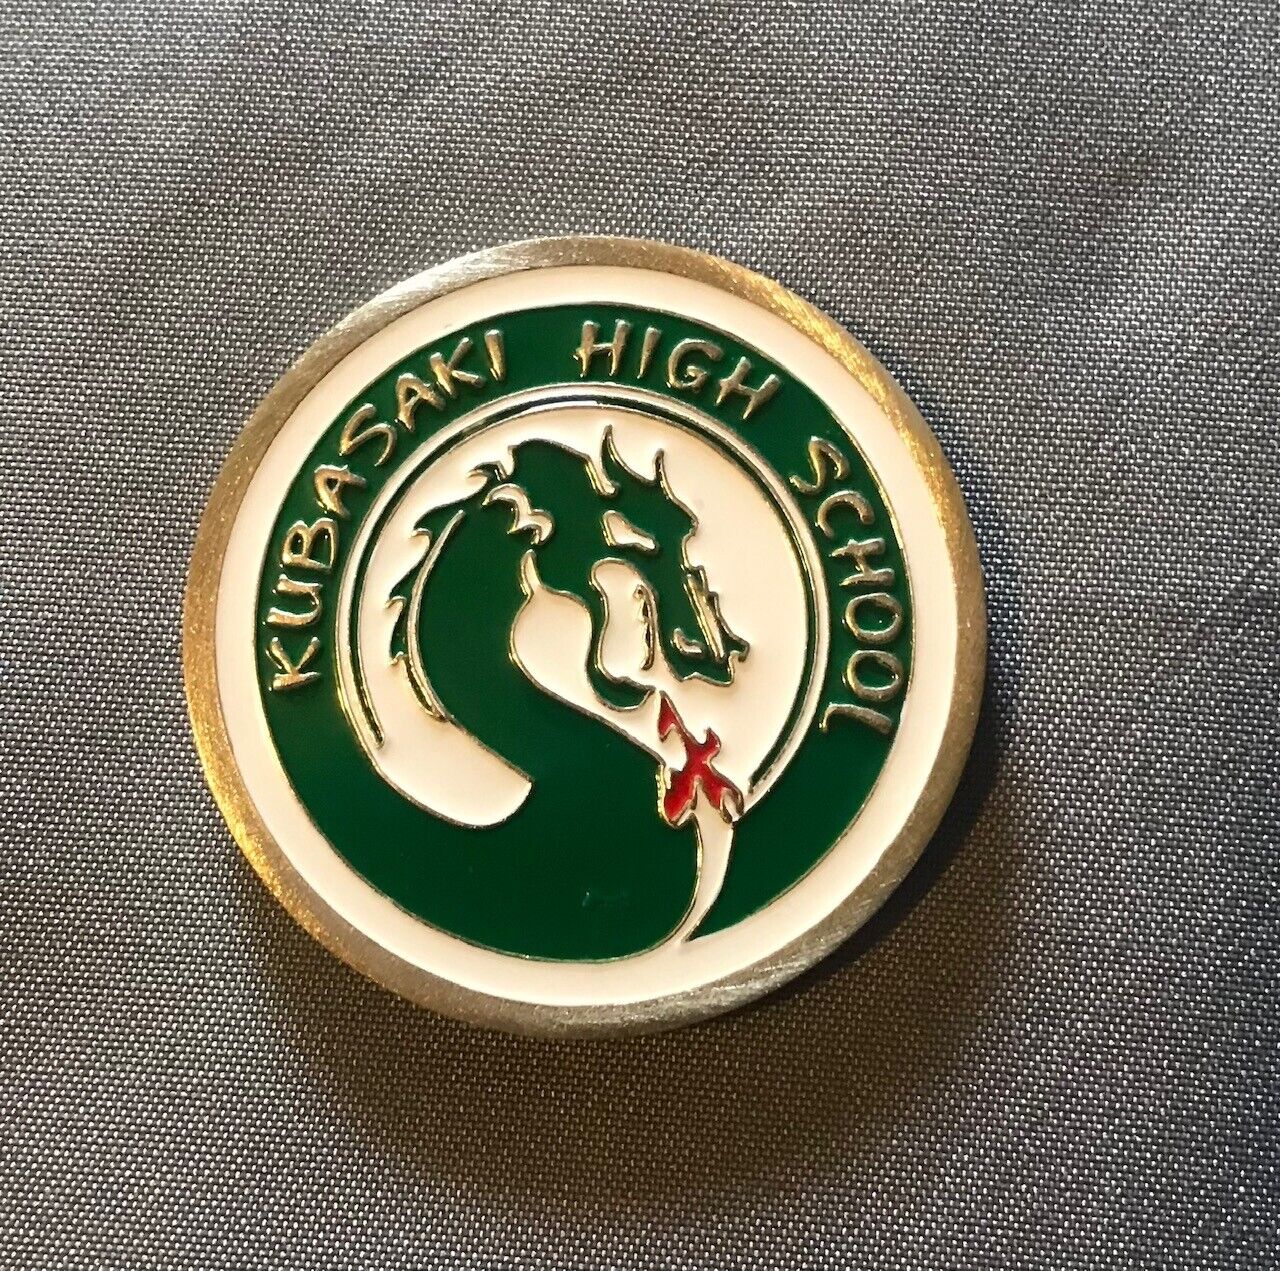 Kubasaki High School Challenge Coin